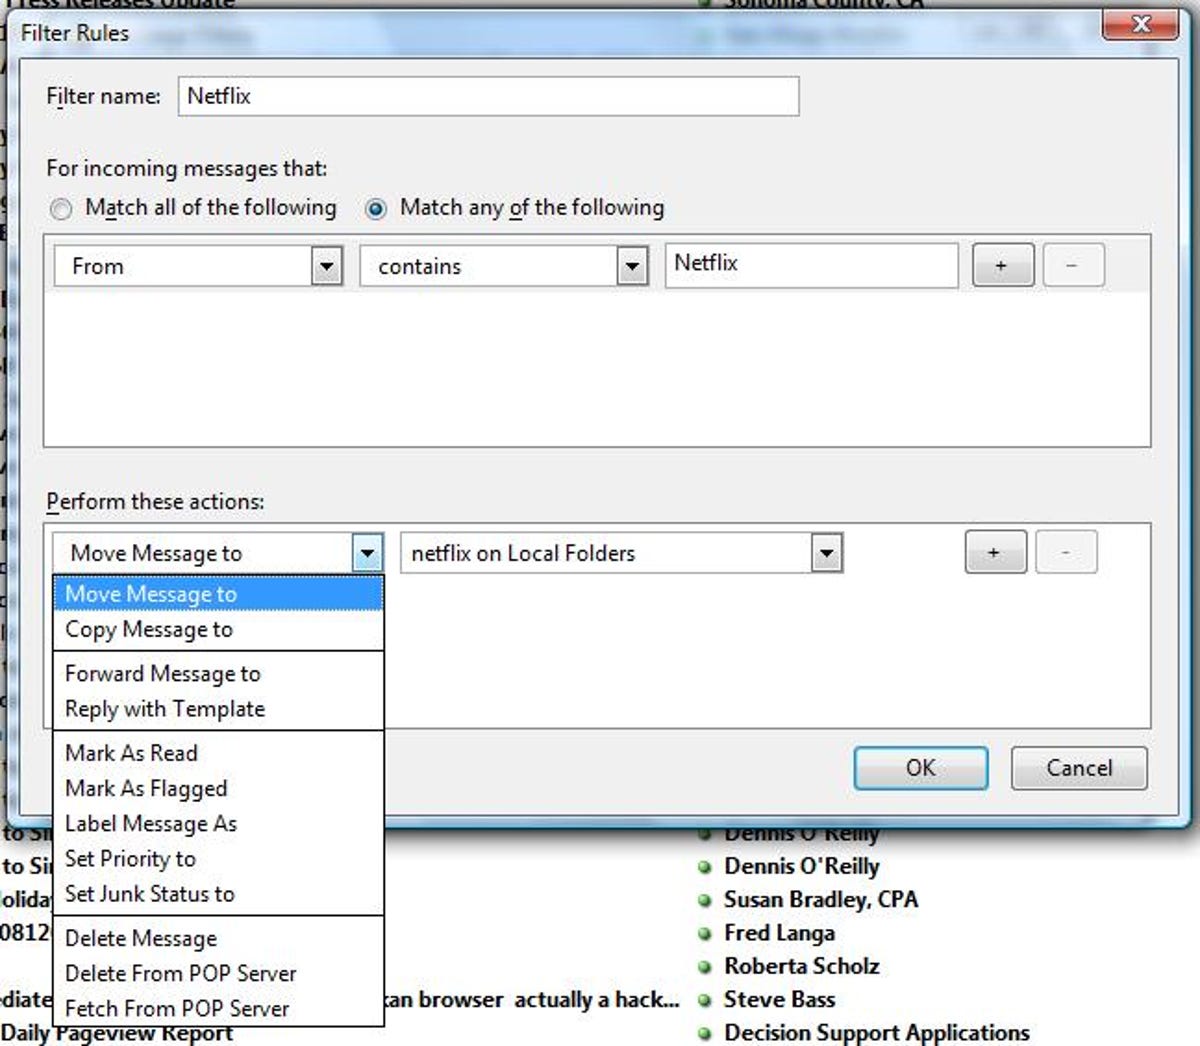 Mozilla Thunderbird Filter Rules dialog box